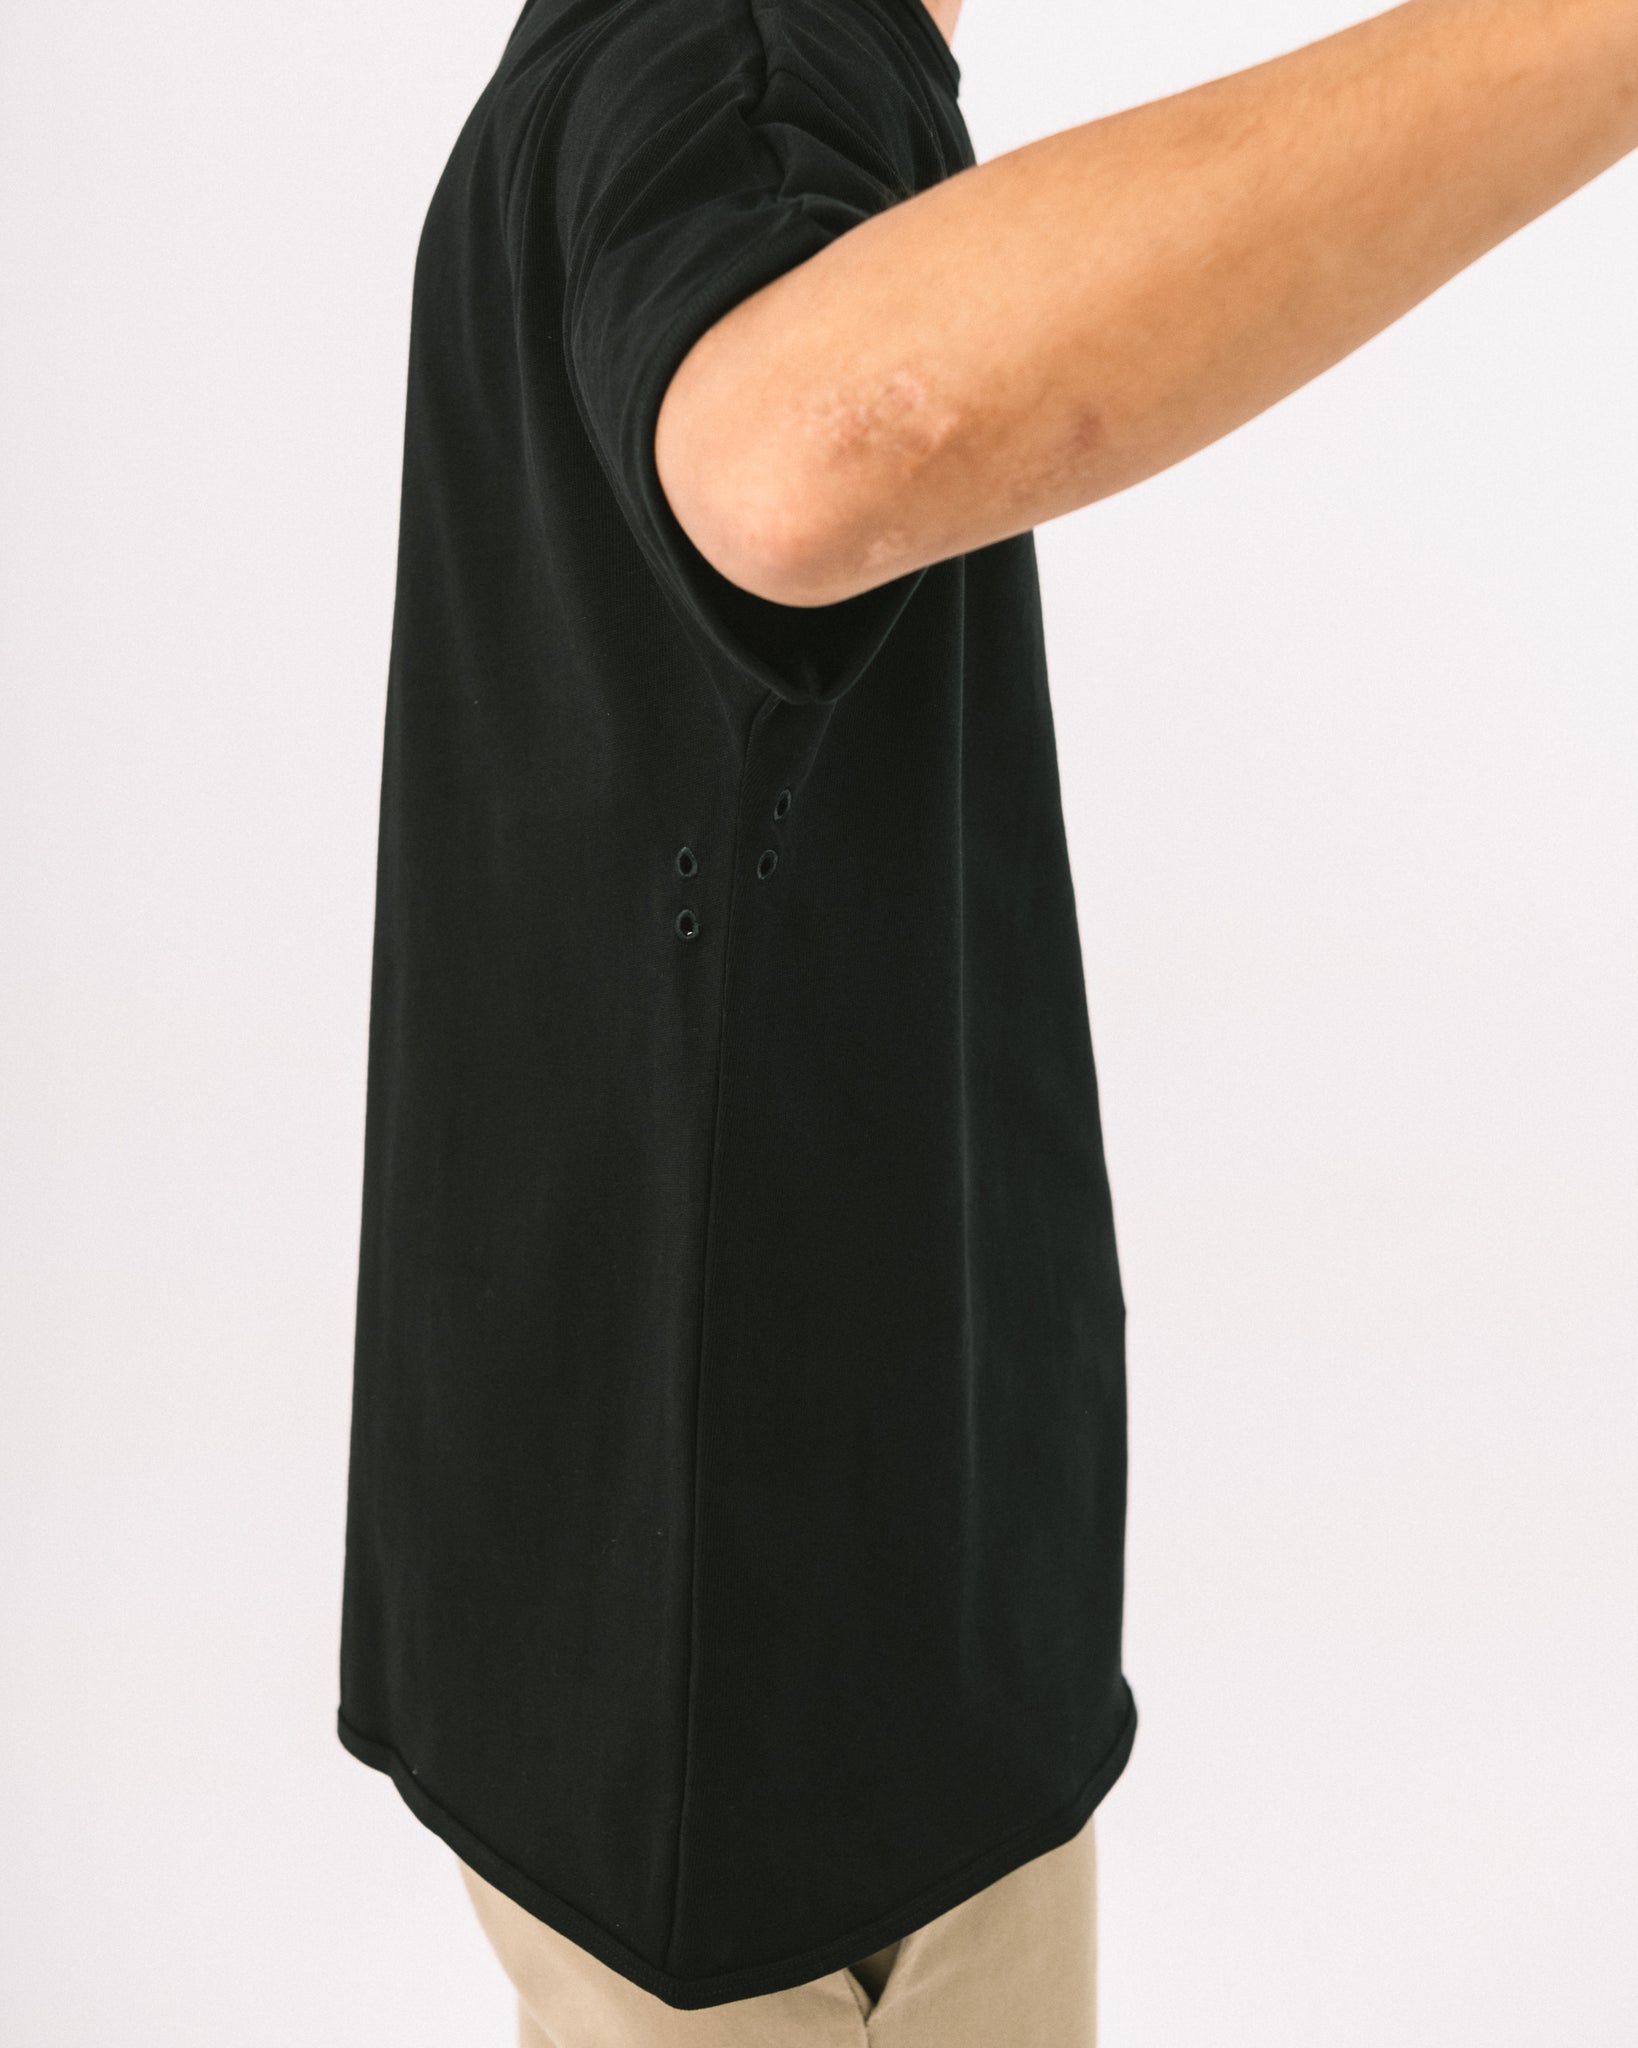 Unisex: Black T (Short Sleeve)